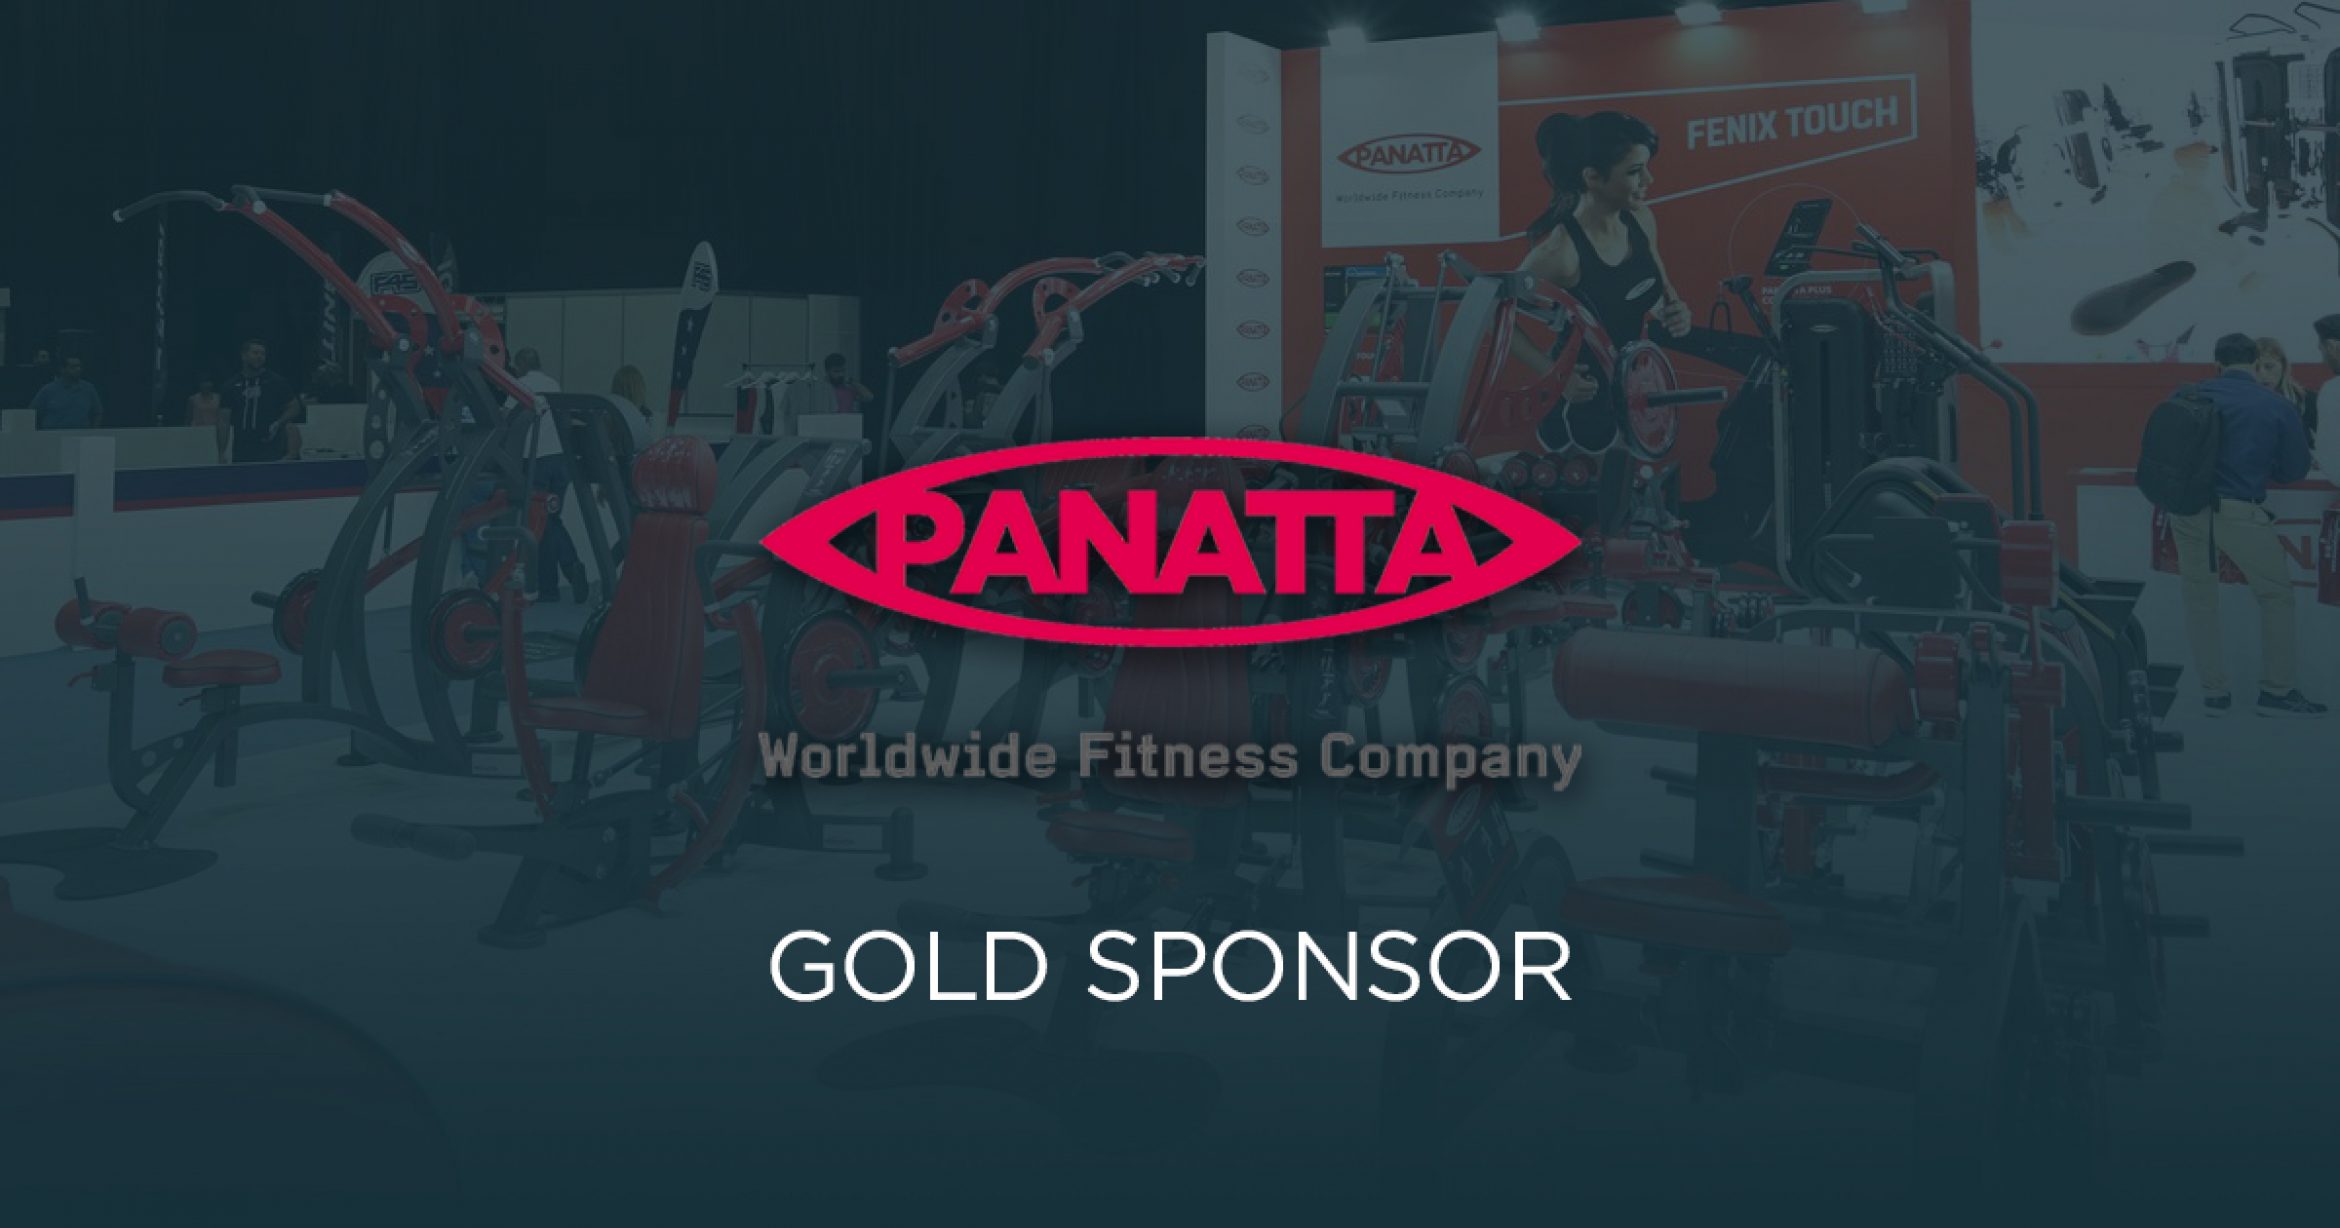 Panatta gold sponsor